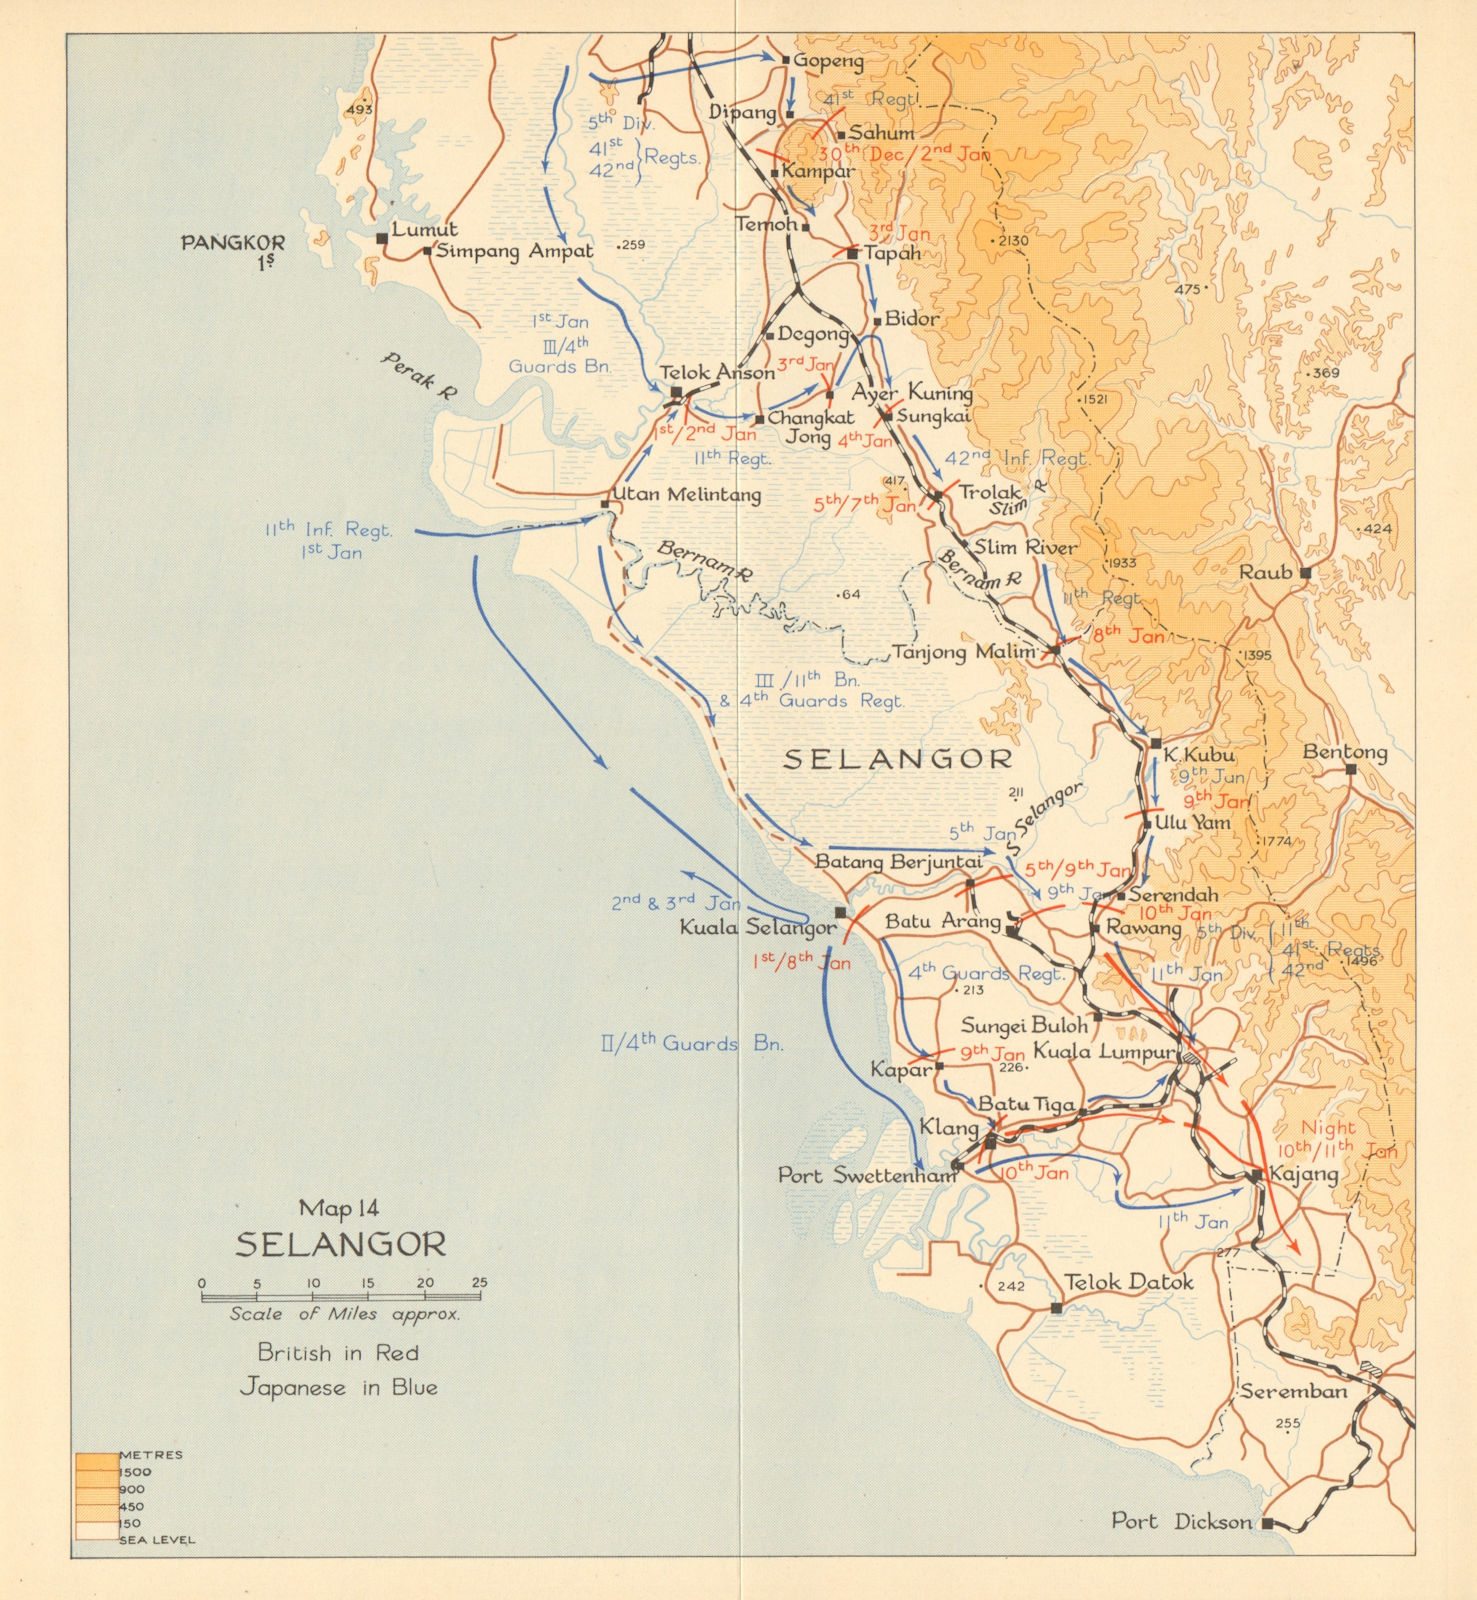 Associate Product Selangor. Japanese invasion of Malaya 1942. Malaysia 1957 old vintage map